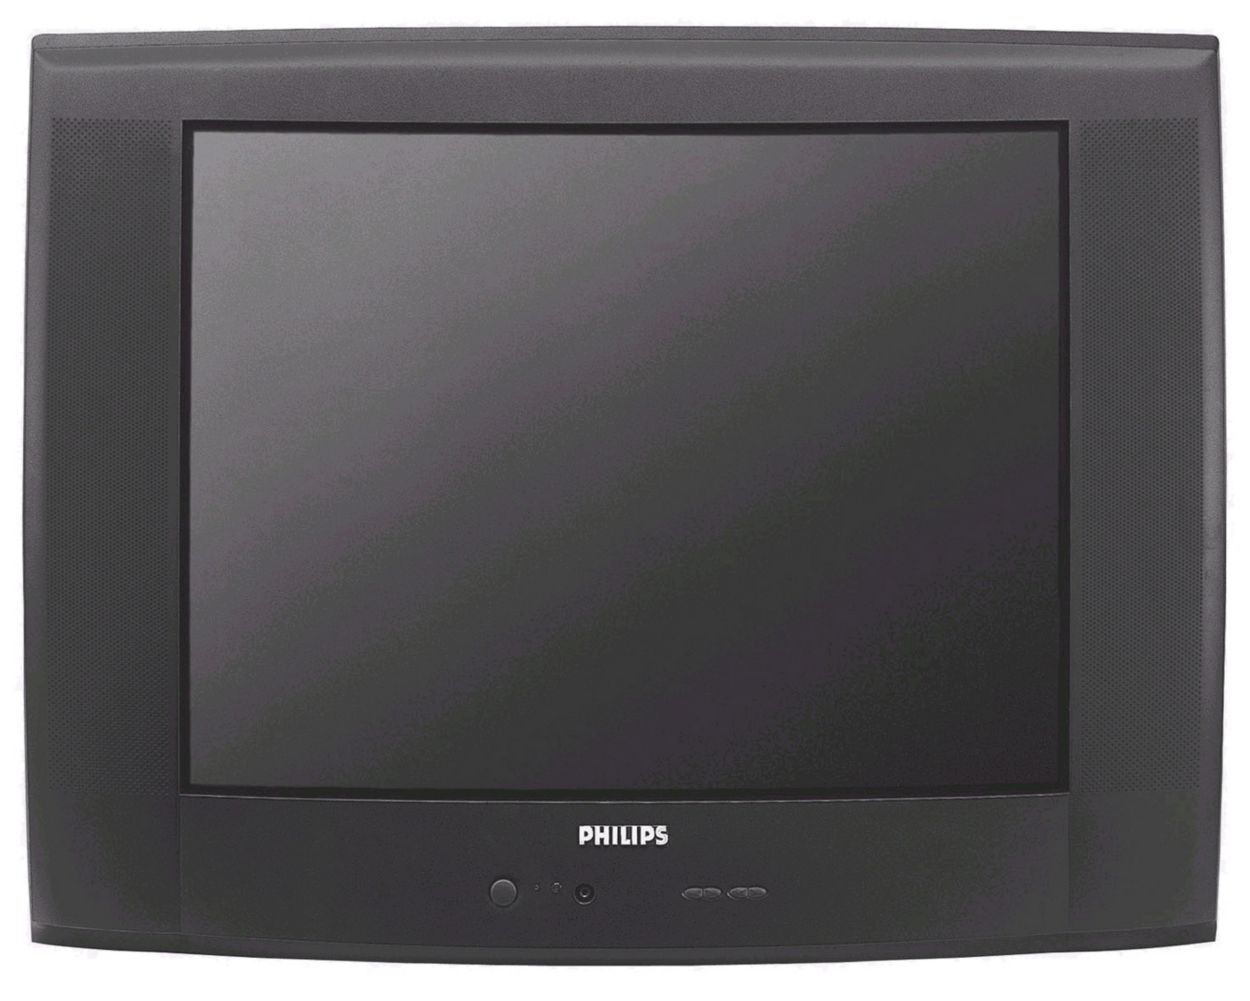 Телевизор philips серый. Телевизор Philips 25pt4475 25". Телевизор Philips 28pt4104/58. Телевизор Philips 25 pt. Телевизор Philips 28pw5408 28".